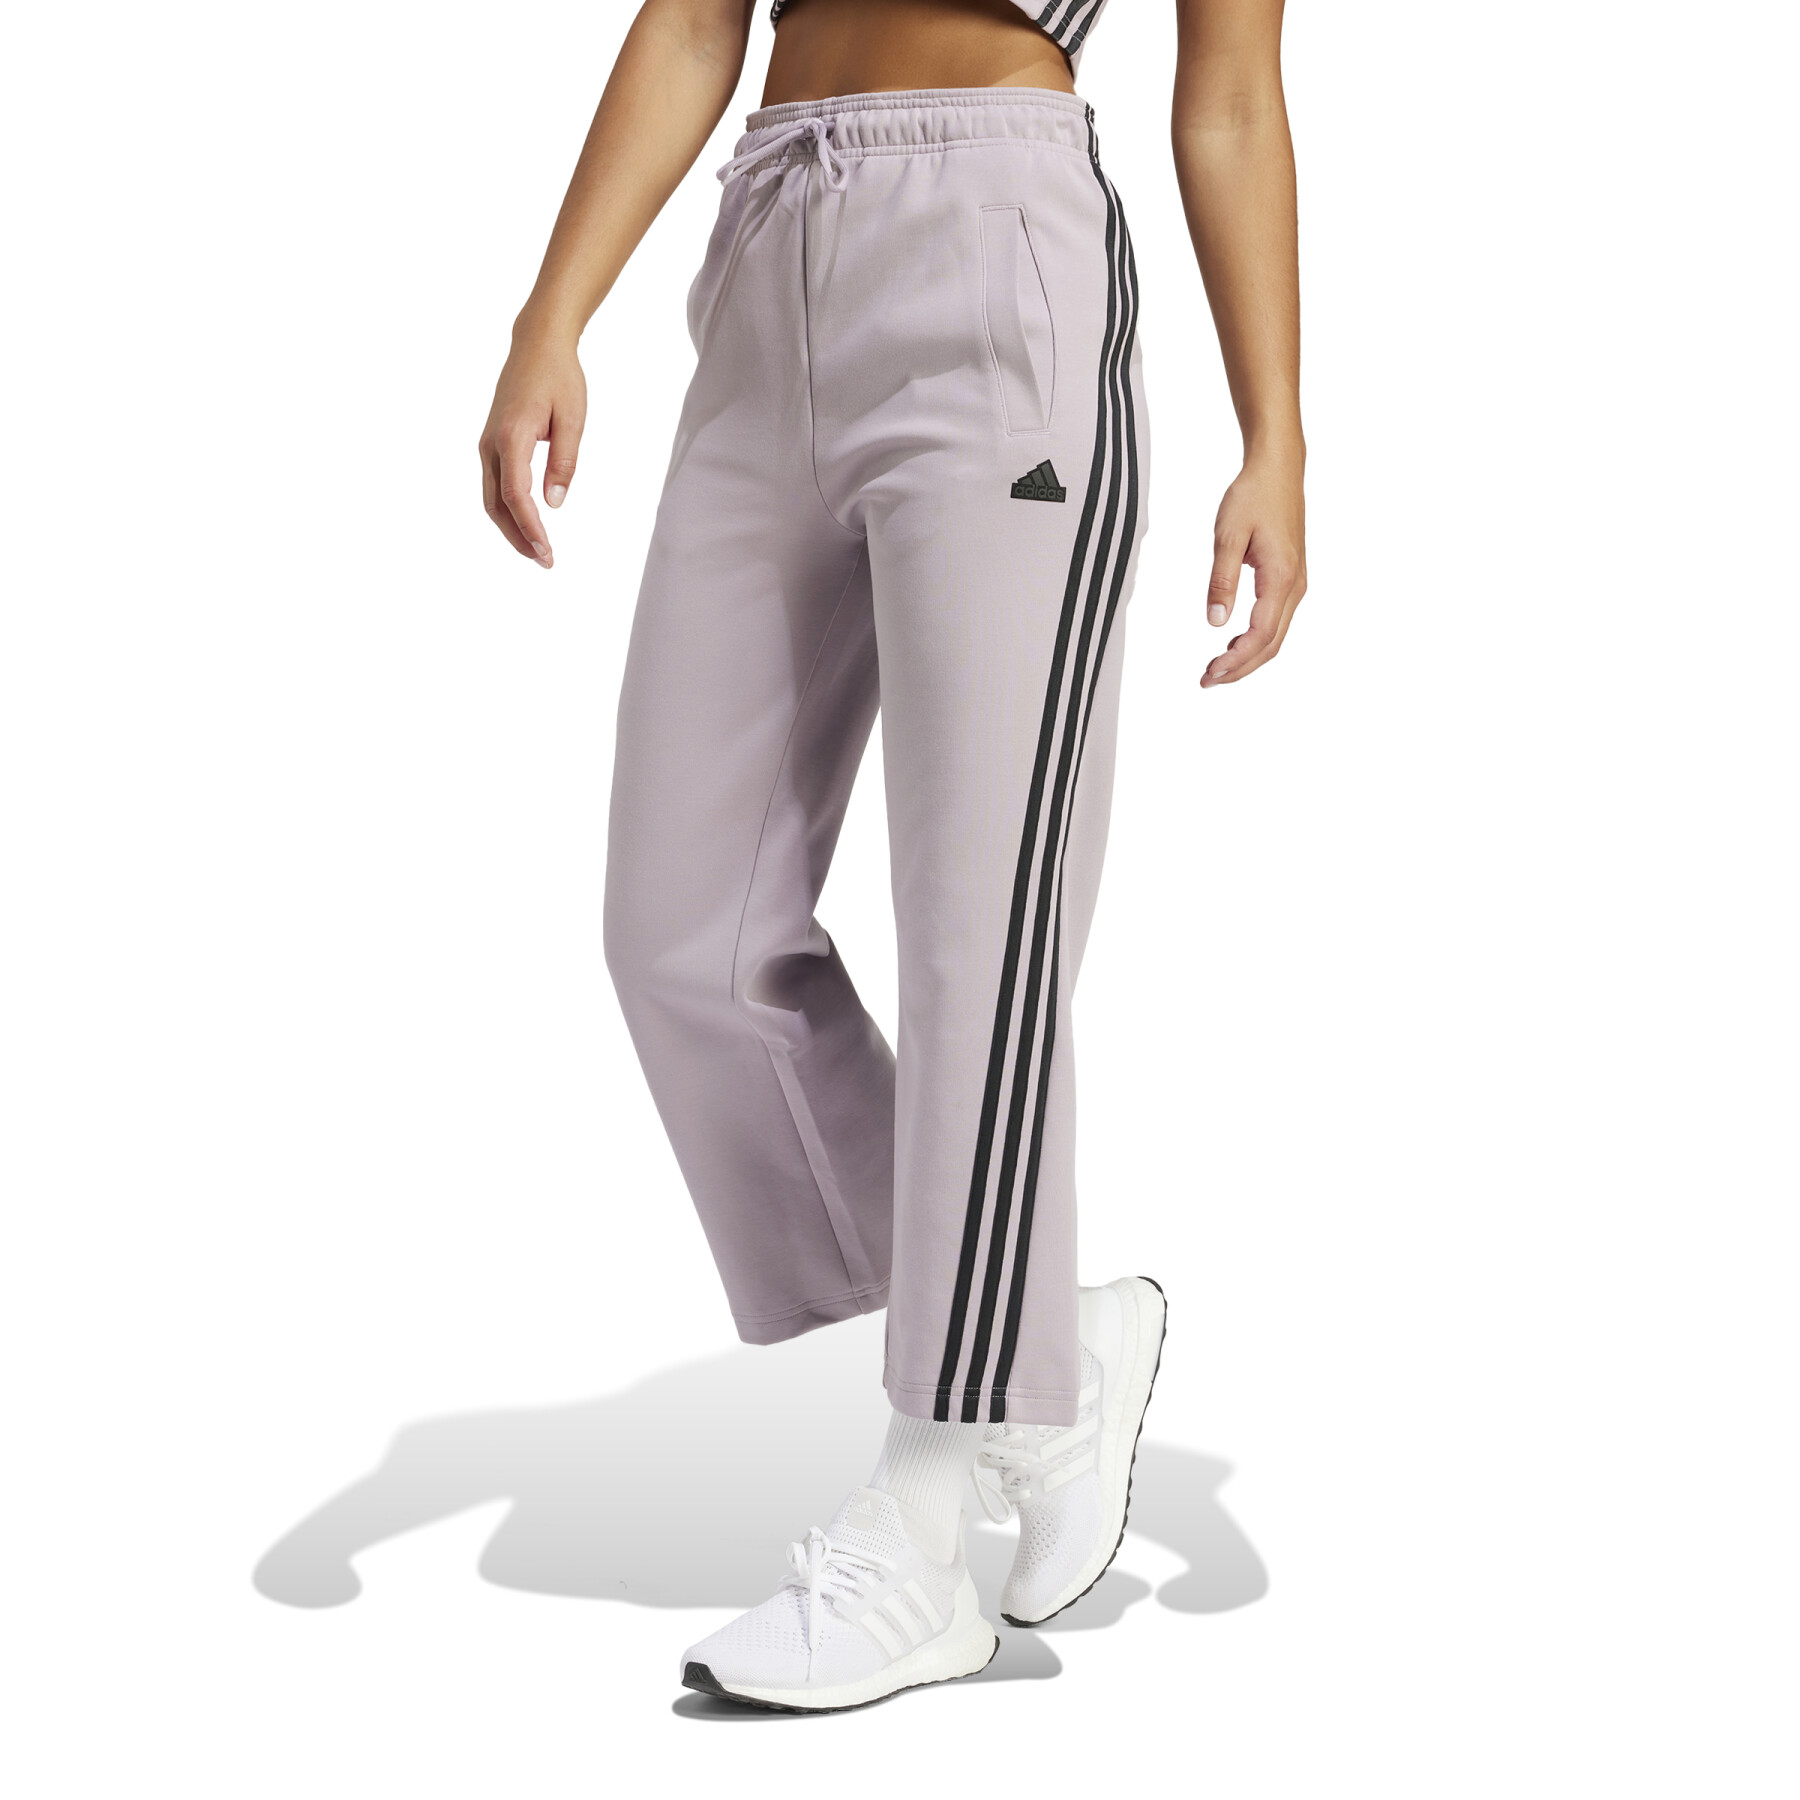 - Stripes suit Lifestyle Future adidas jogging - Icons 3 - Brands Women\'s Hem Open adidas